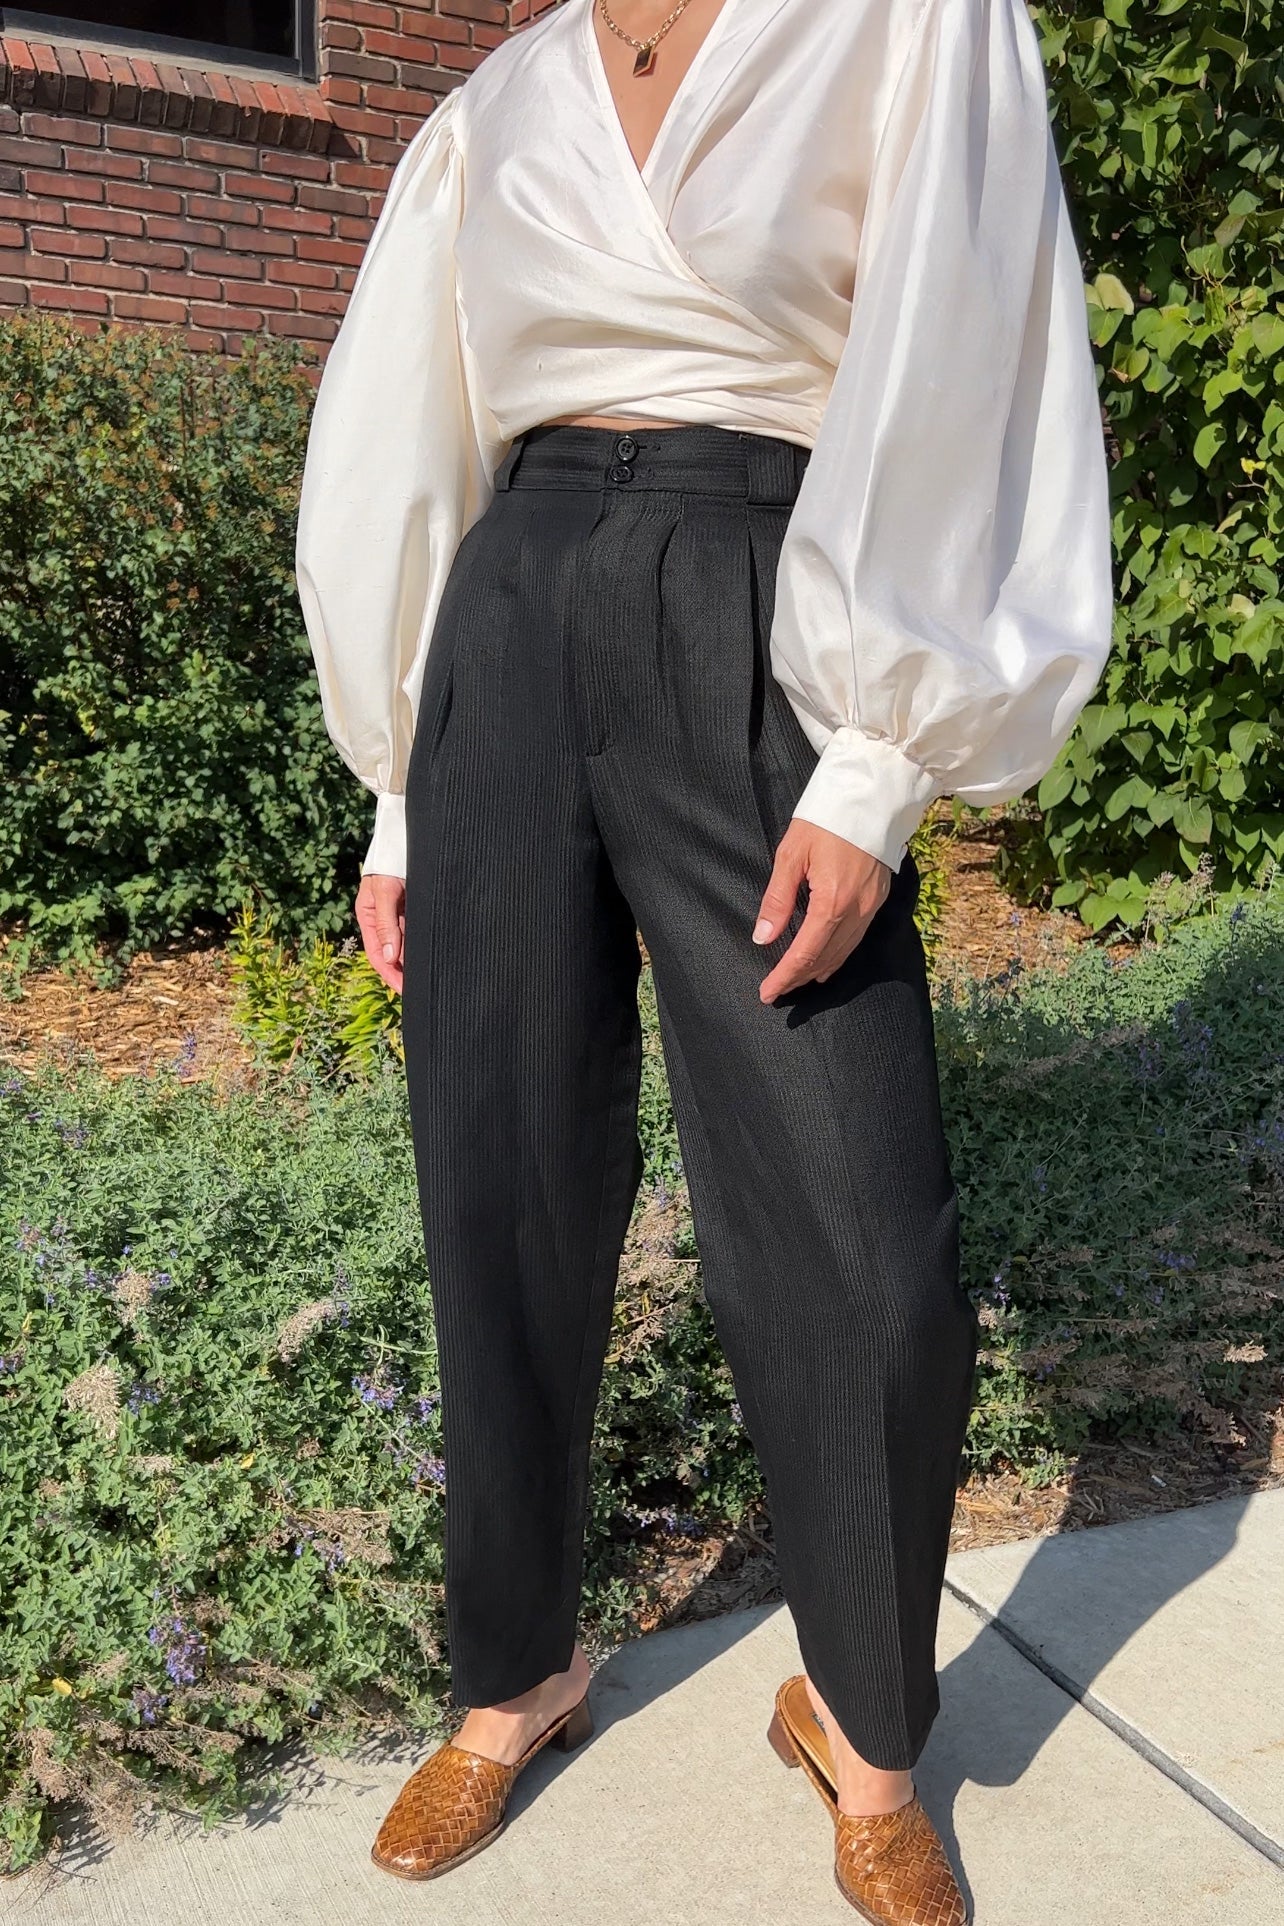 Vintage Corbeau Wool Blend High Waisted Trousers